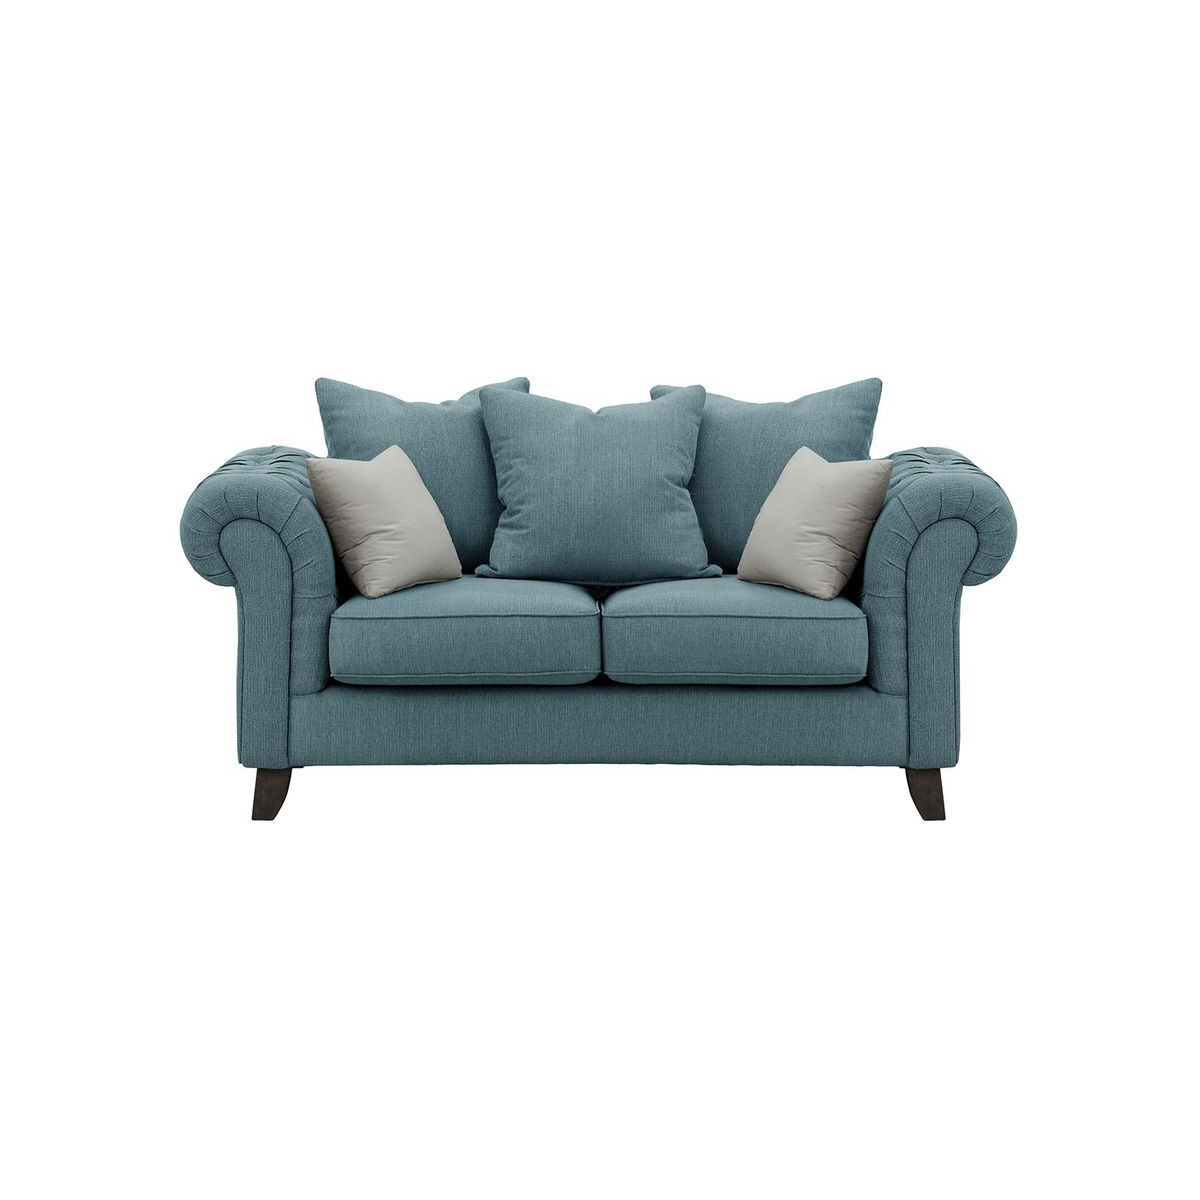 Monza 2 Seater Sofa, Deep blue/Silver, Leg colour: black - image 1